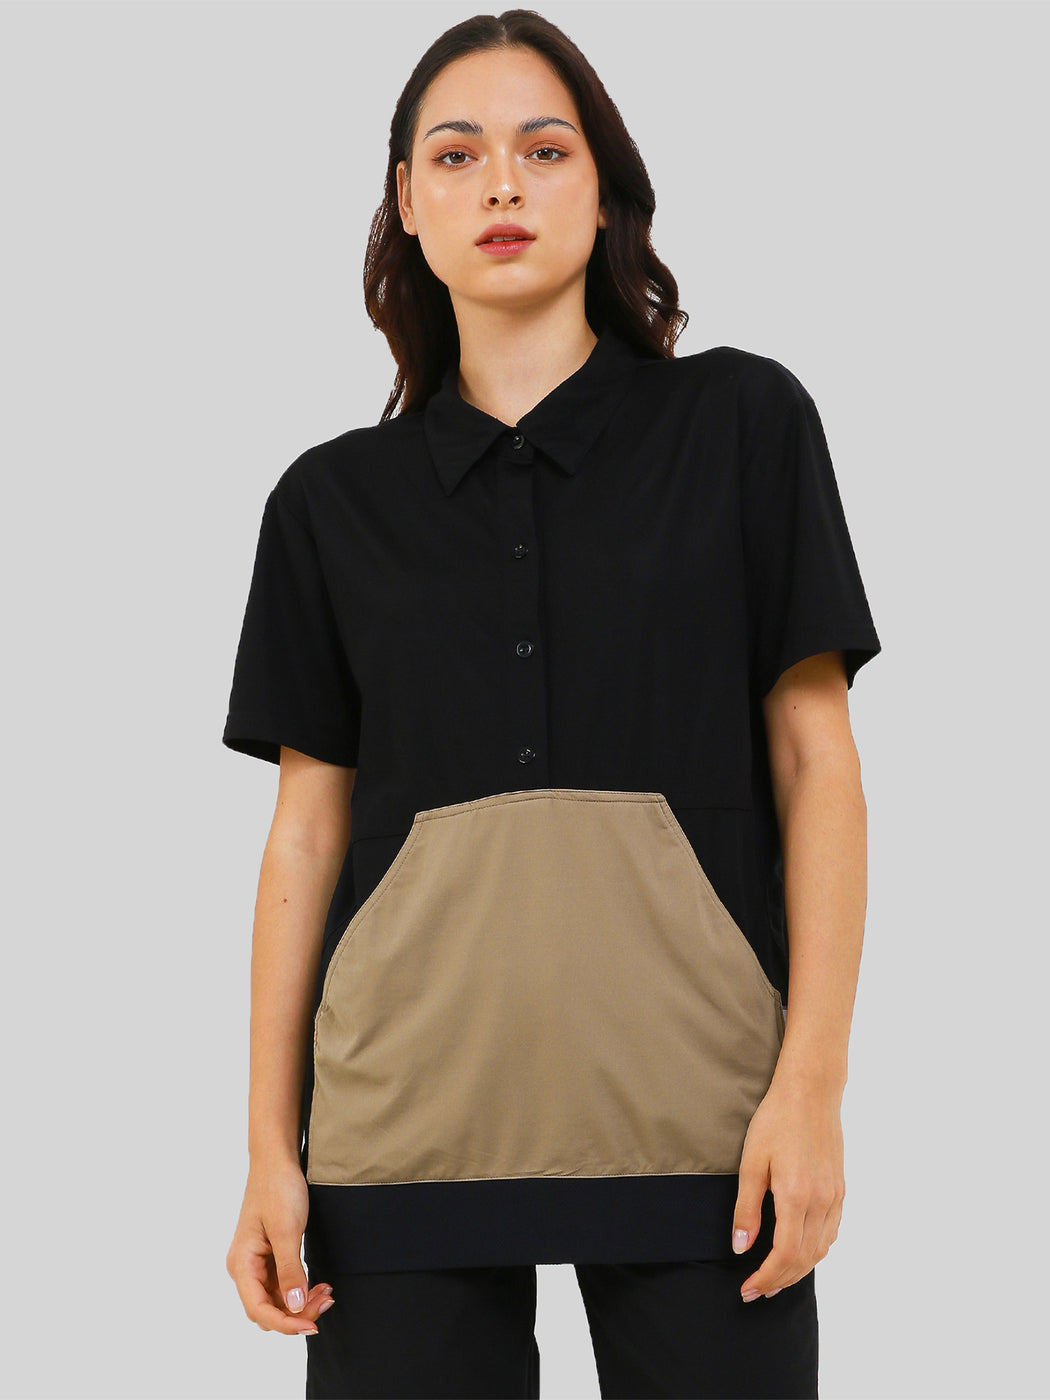 Unisex Front Pocket Utilitarian Shirt Female Black